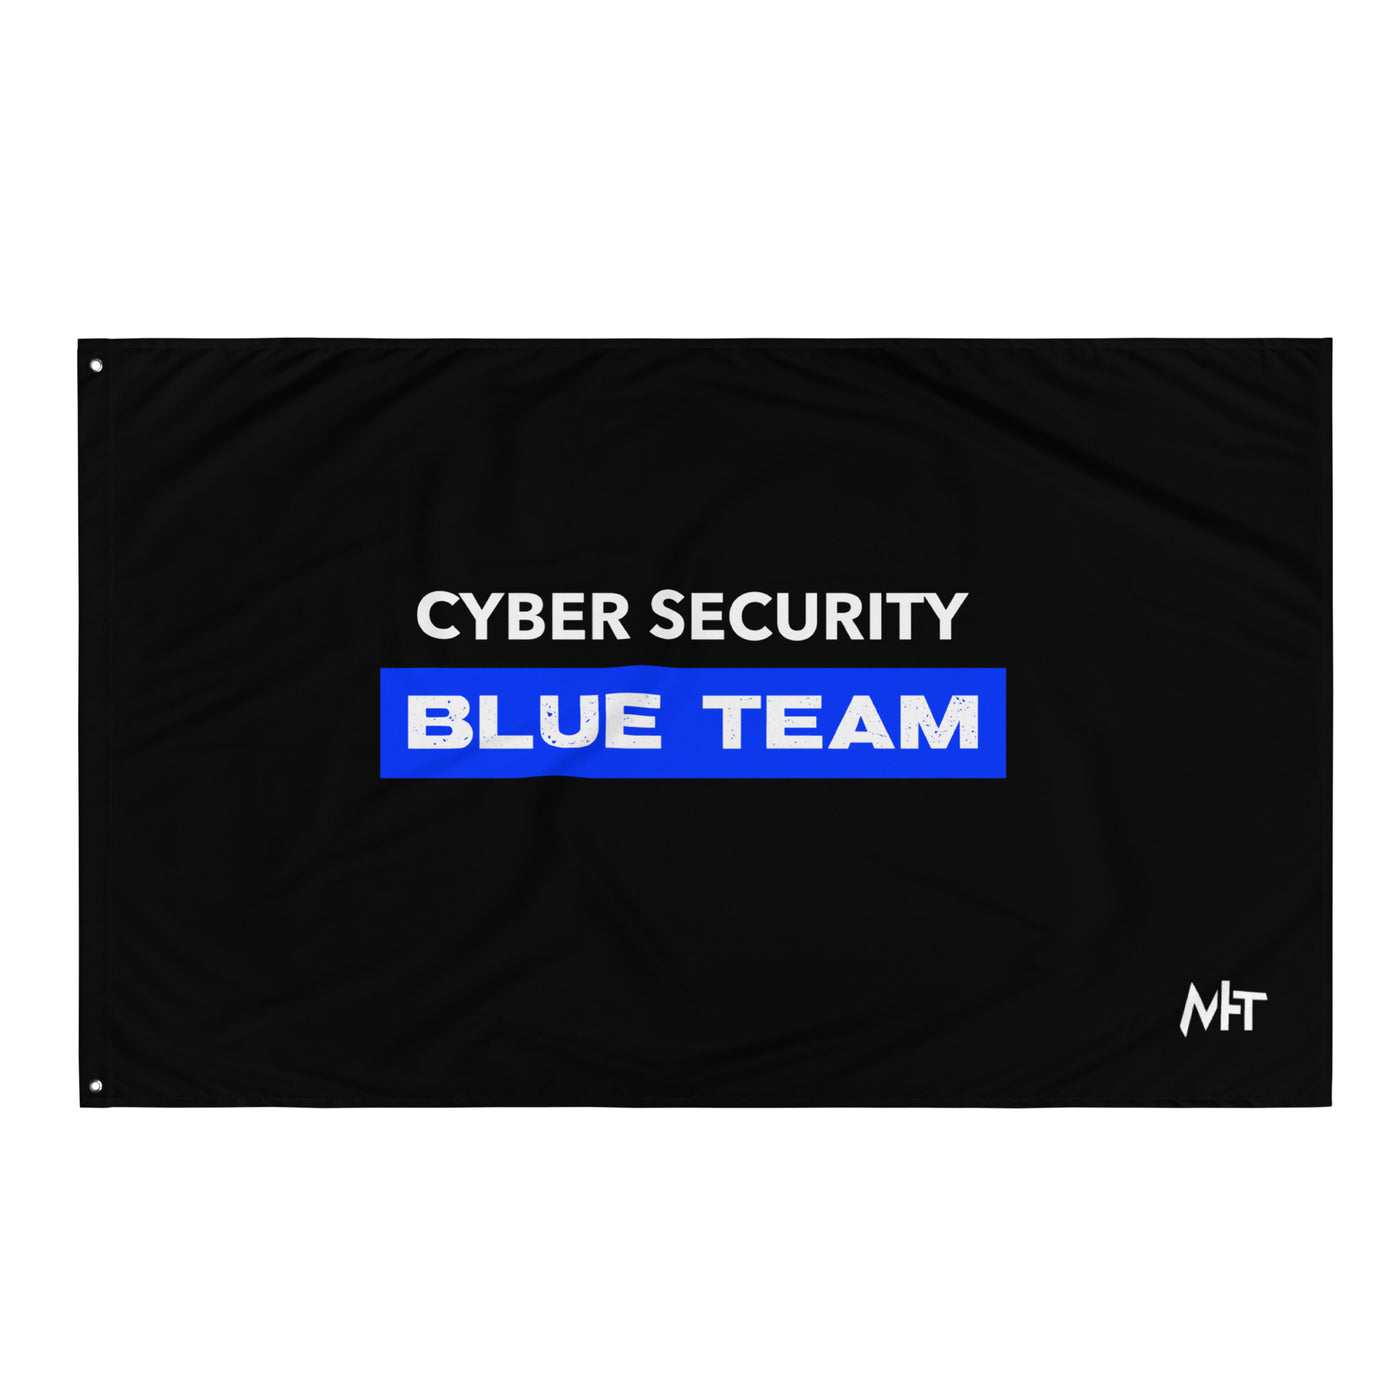 Cyber Security Blue Team V9 - Flag